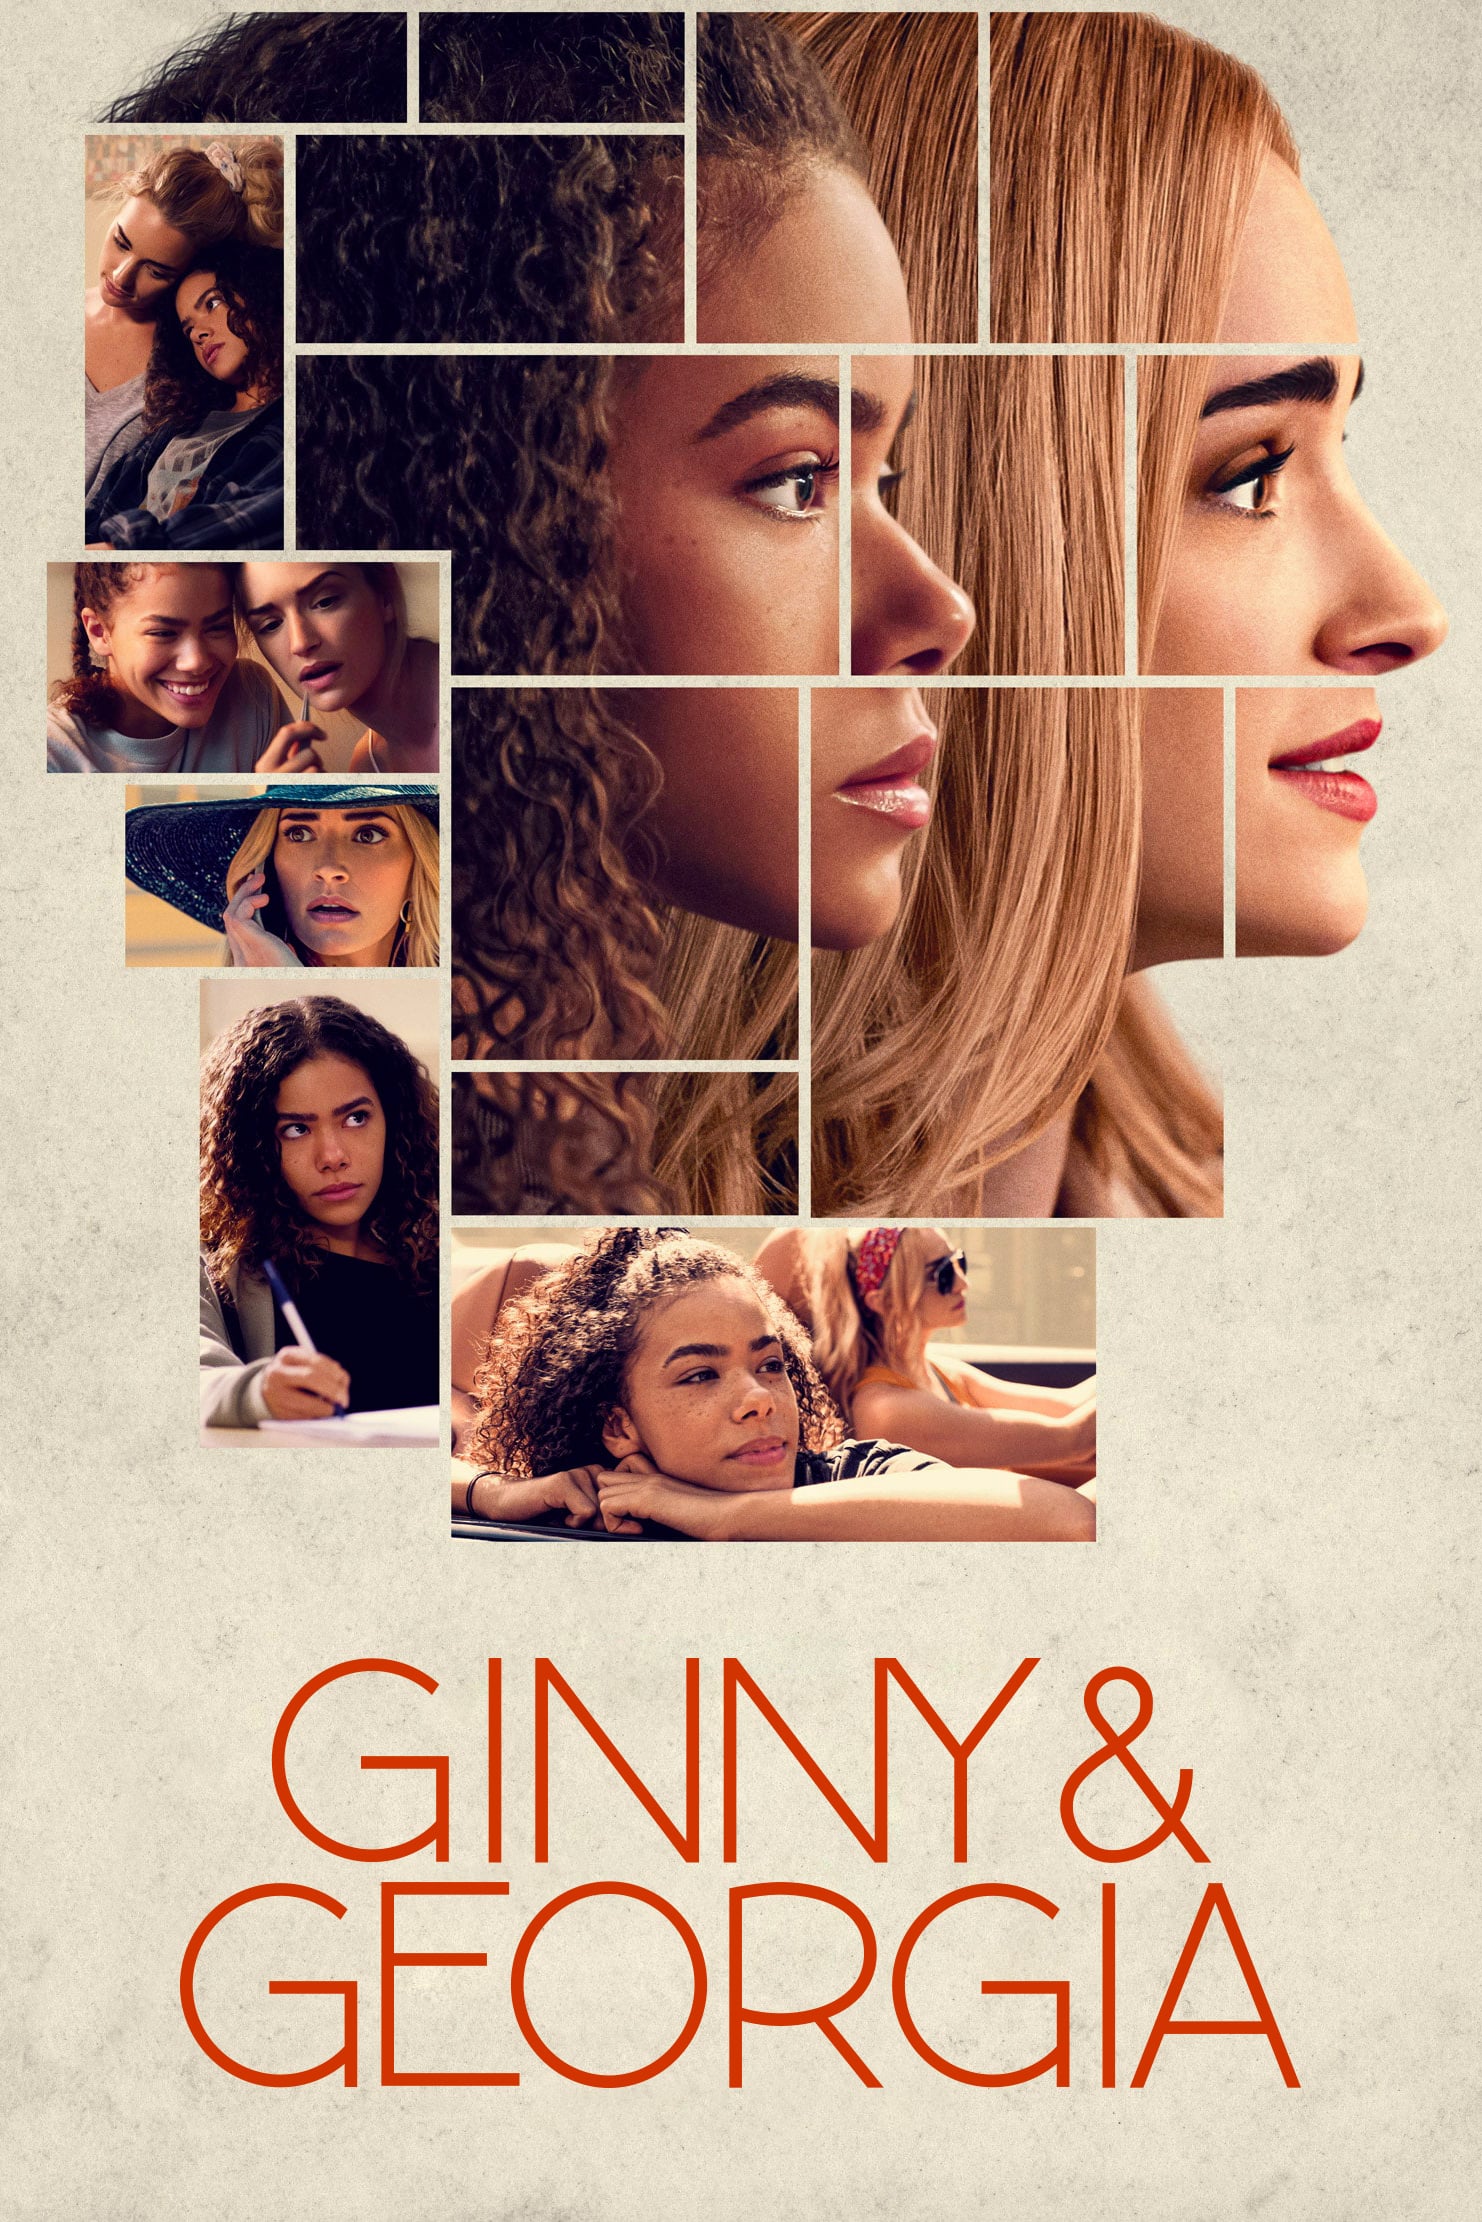 Ginny & Georgia rating